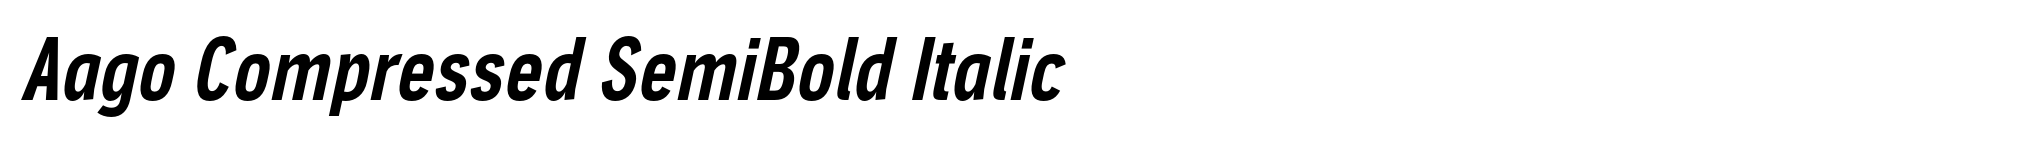 Aago Compressed SemiBold Italic image